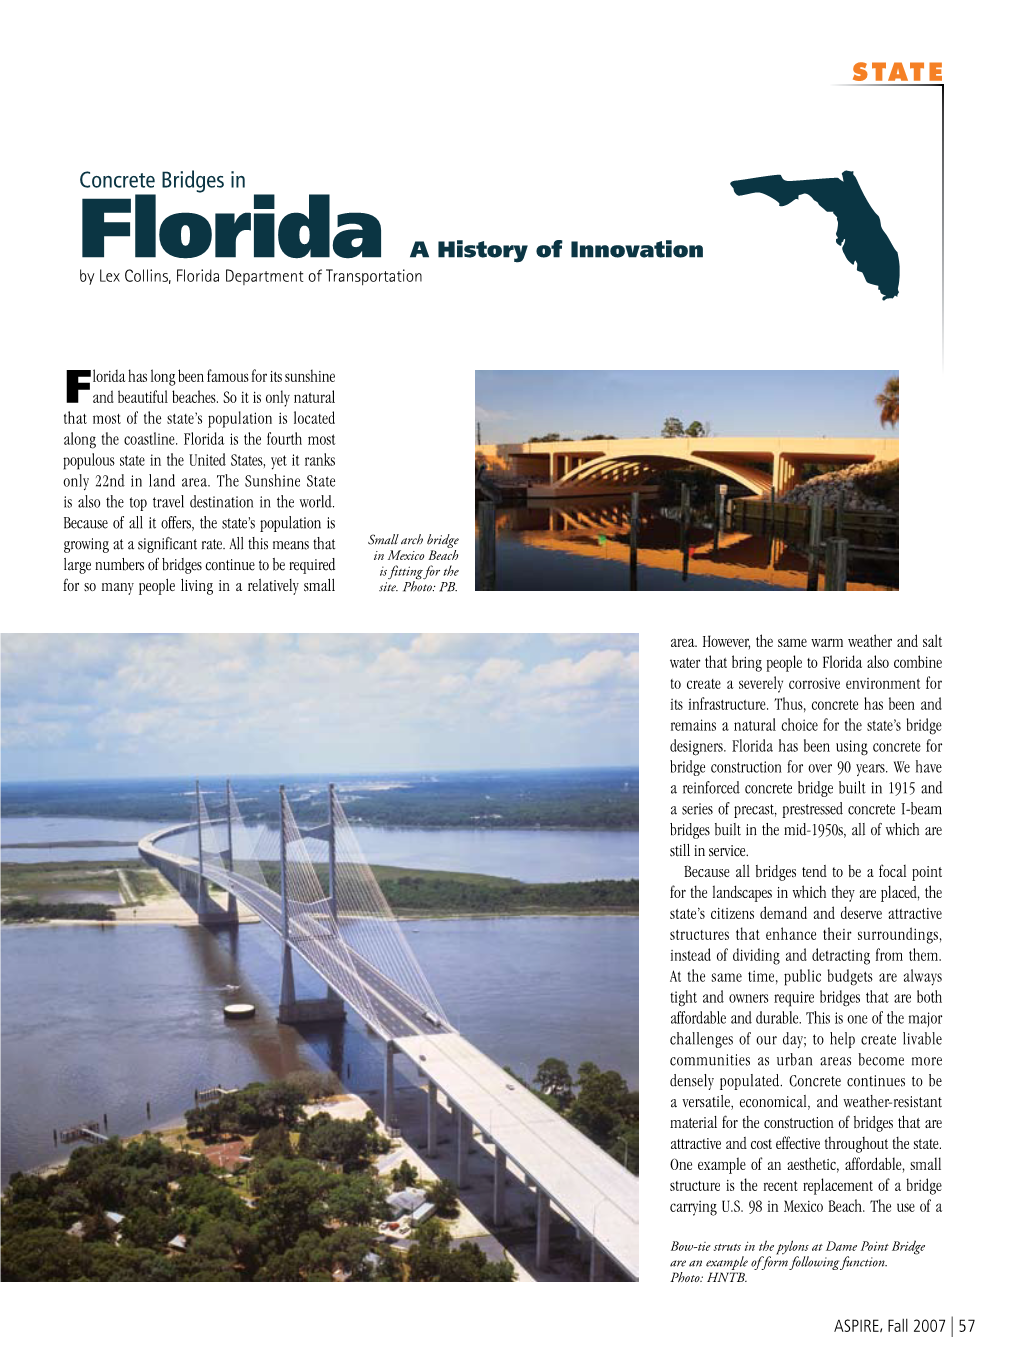 STATE—Concrete Bridges in Florida a History